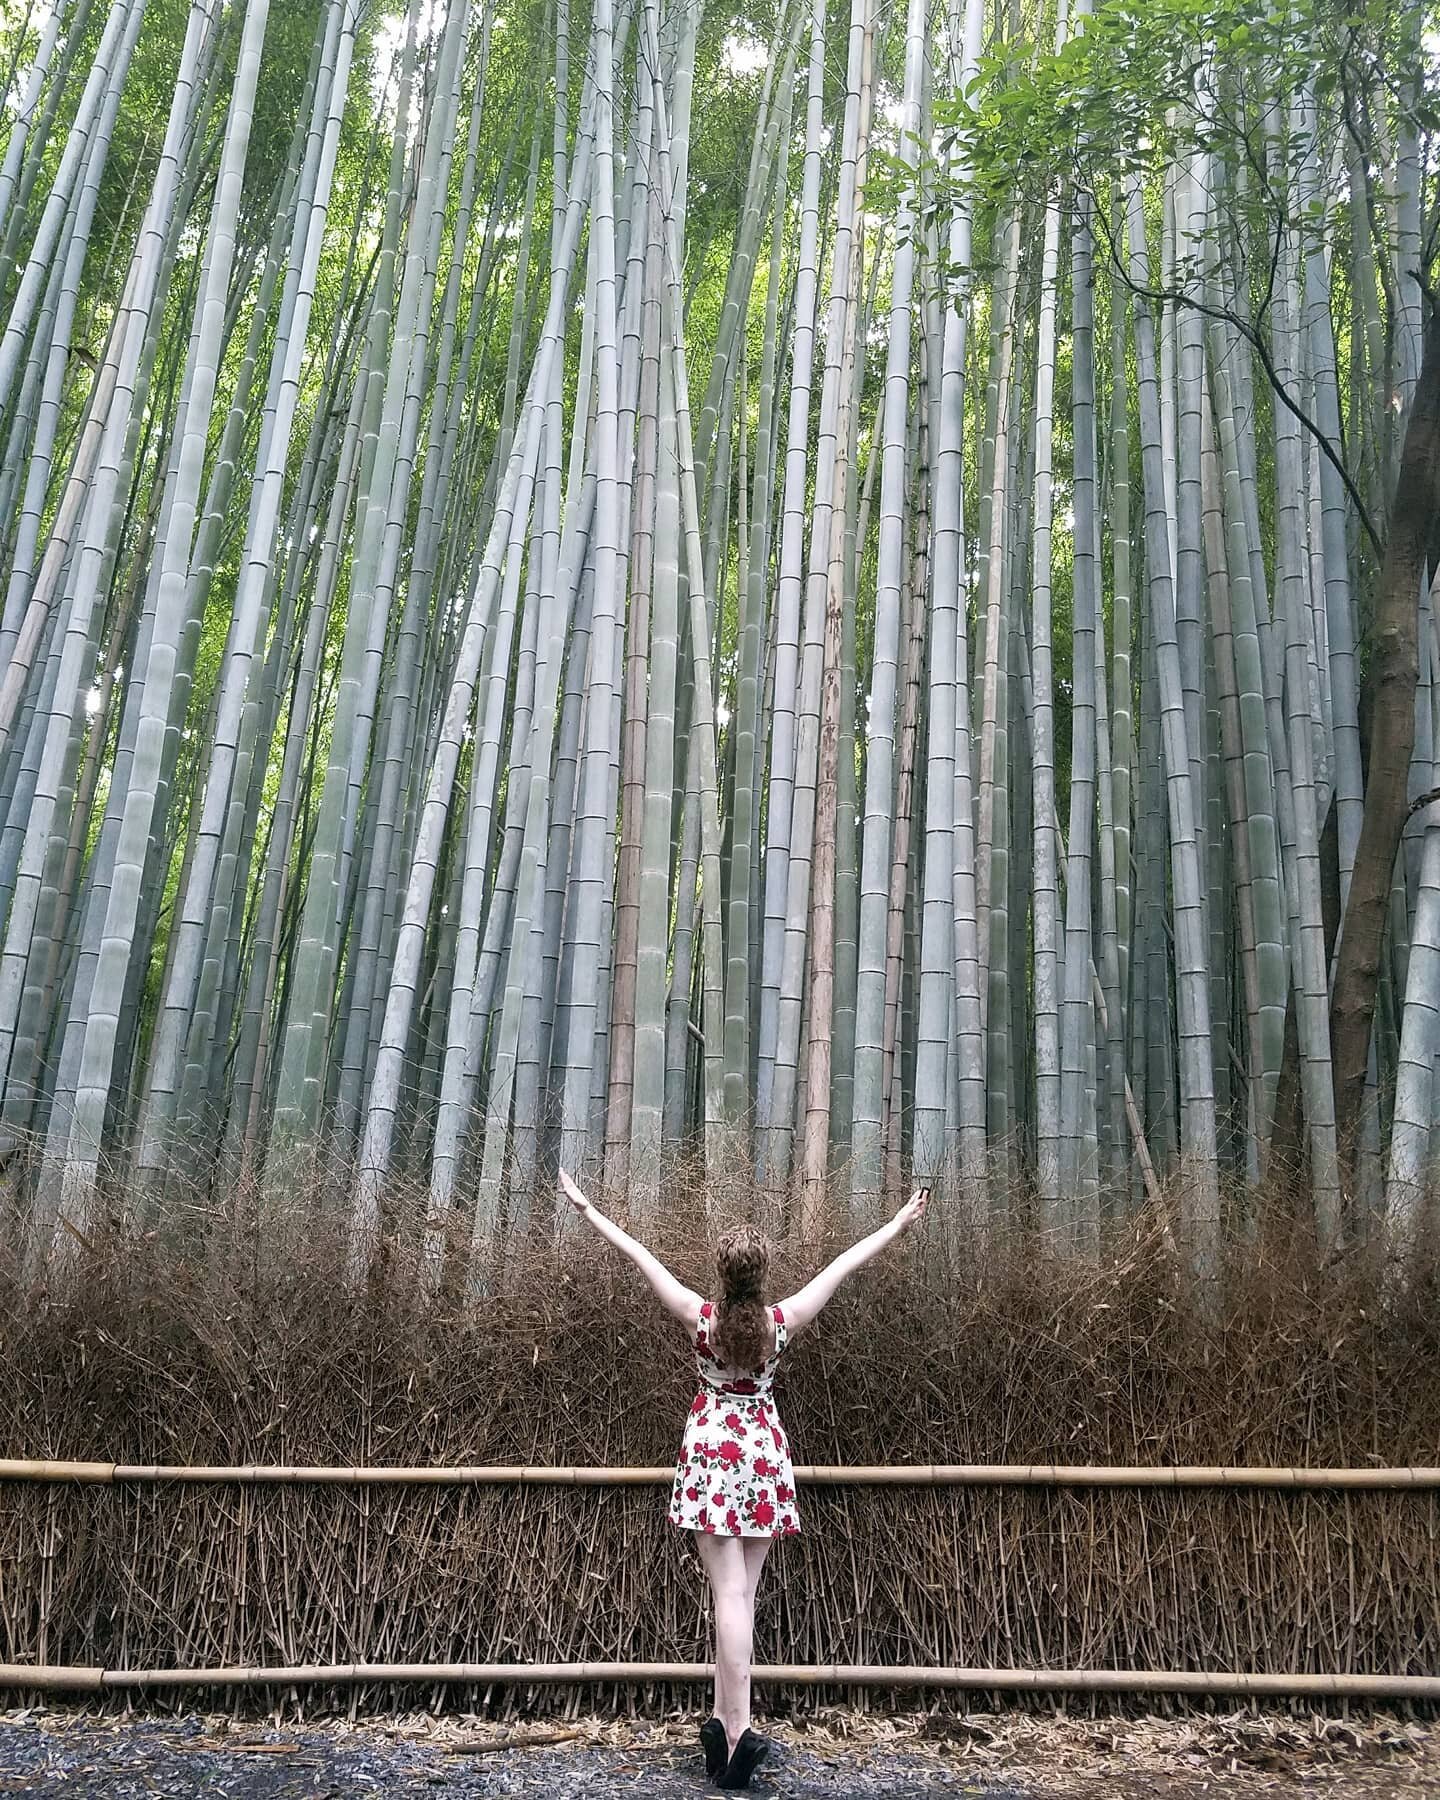 A sous-sus for bamboo.
.
.
📸 by me!
.
.
.
#bambooforest #bamboo #kyoto #japan #kyotojapan #japantravel #solotravel #travelgram #wanderlust #dametraveler #shotoftheday #gltlove #girlslovetravel #sheisnotlost #travelphotography #beautifudestinations #